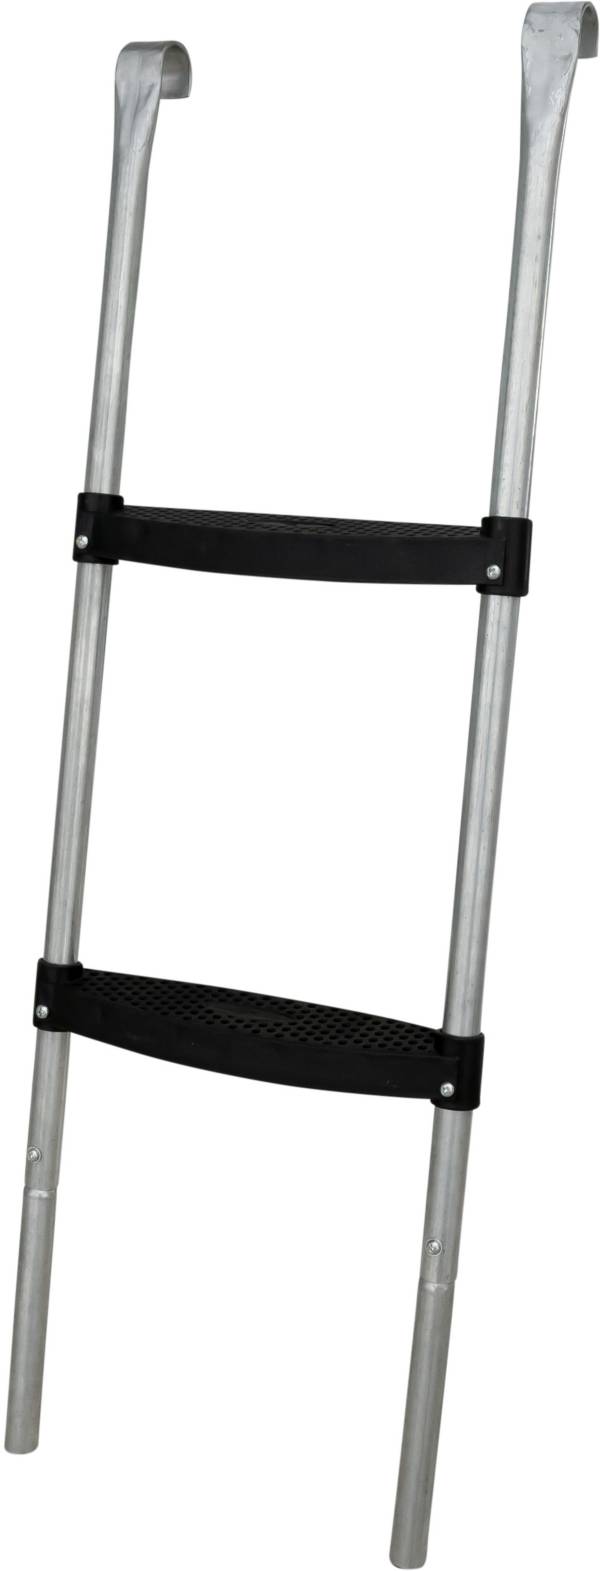 TruJump 38" Trampoline Ladder product image